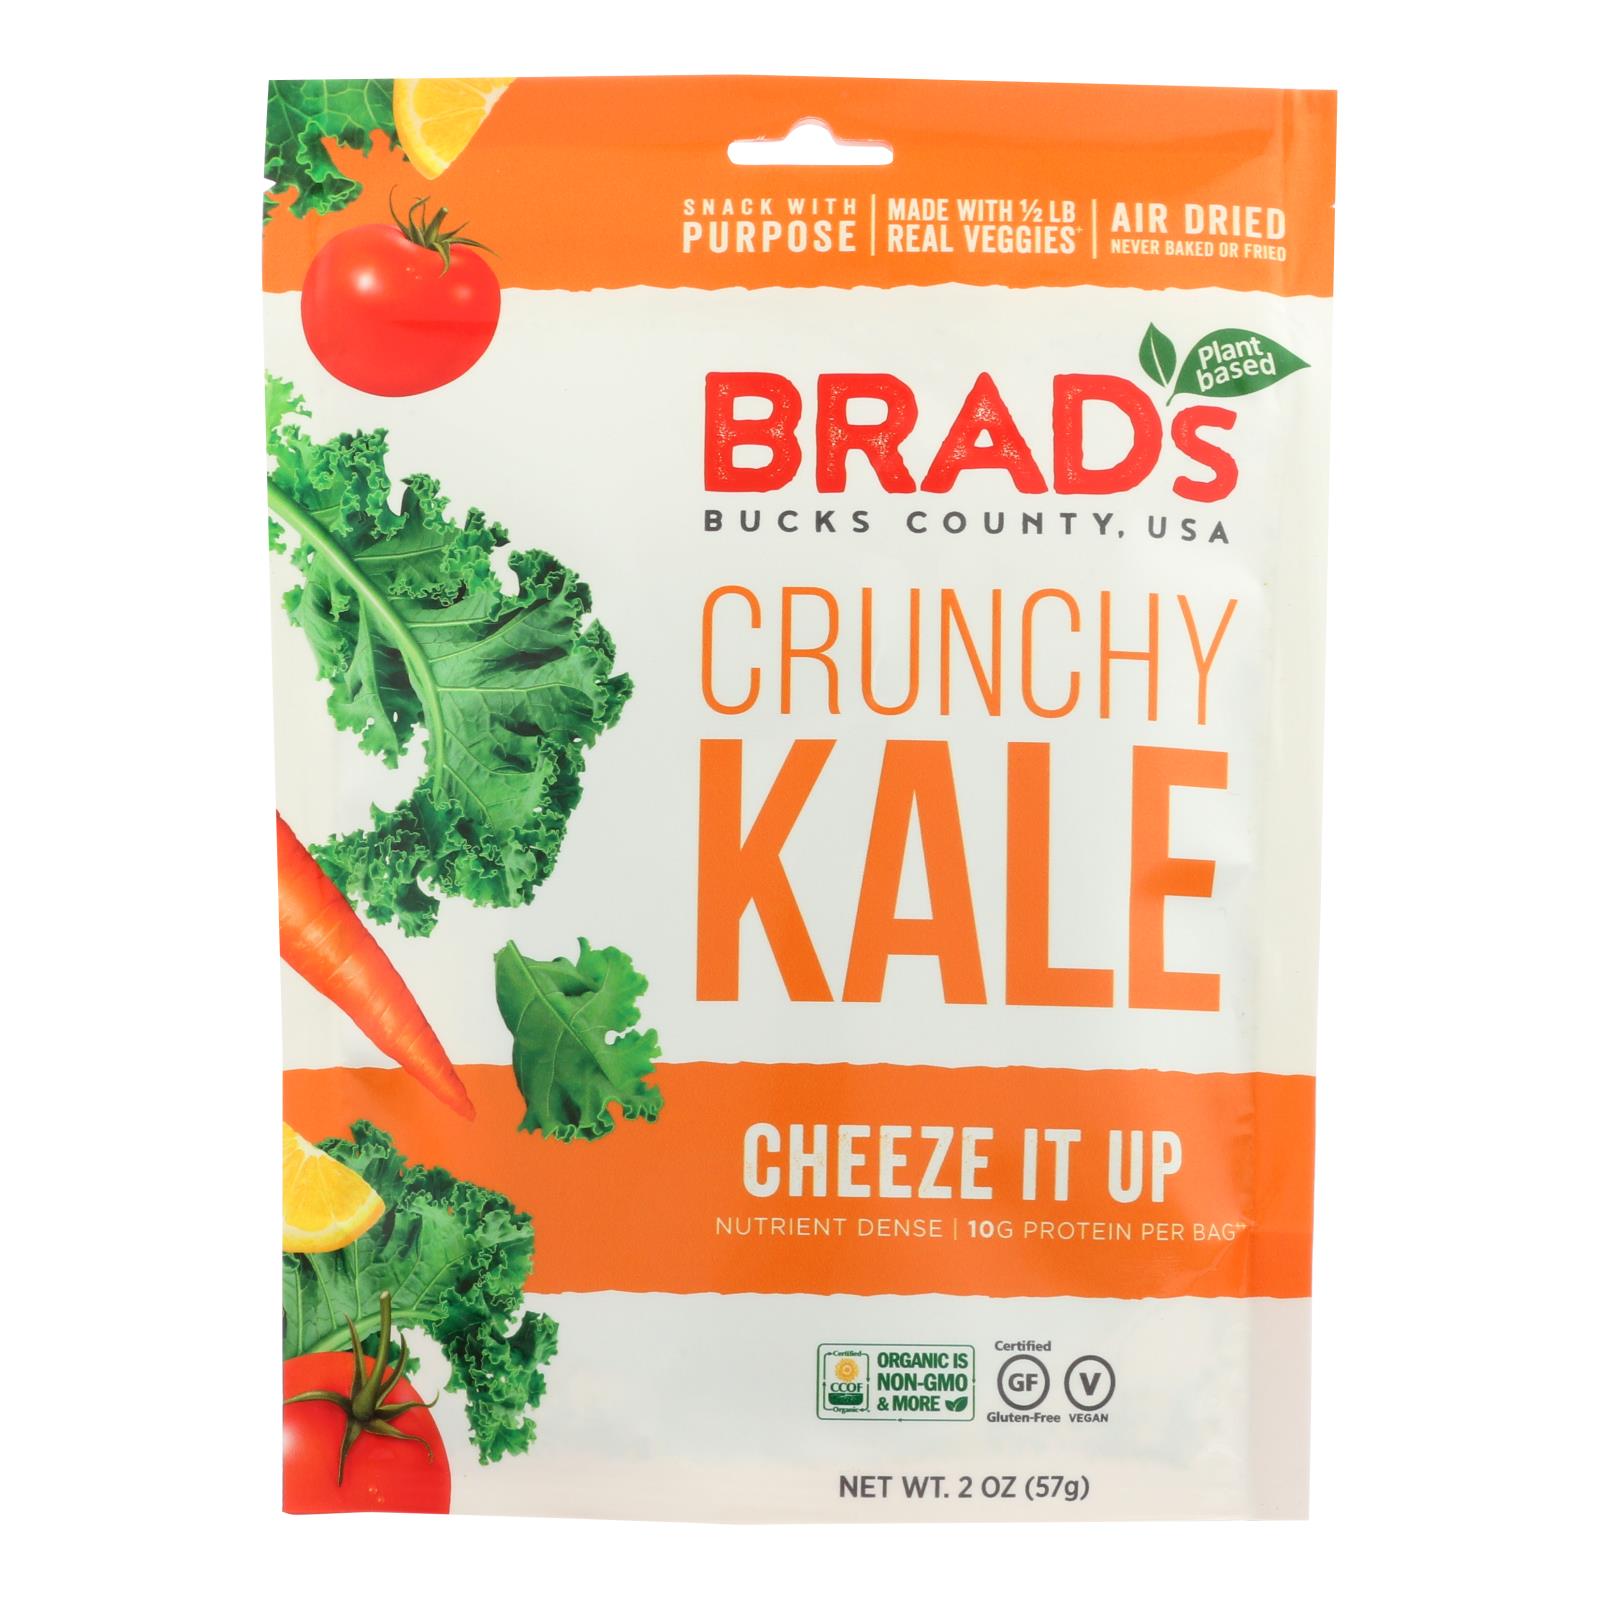 Brad's Plant Based - Crunchy Kale - Cheeze It Up - 12개 묶음상품 - 2 oz.